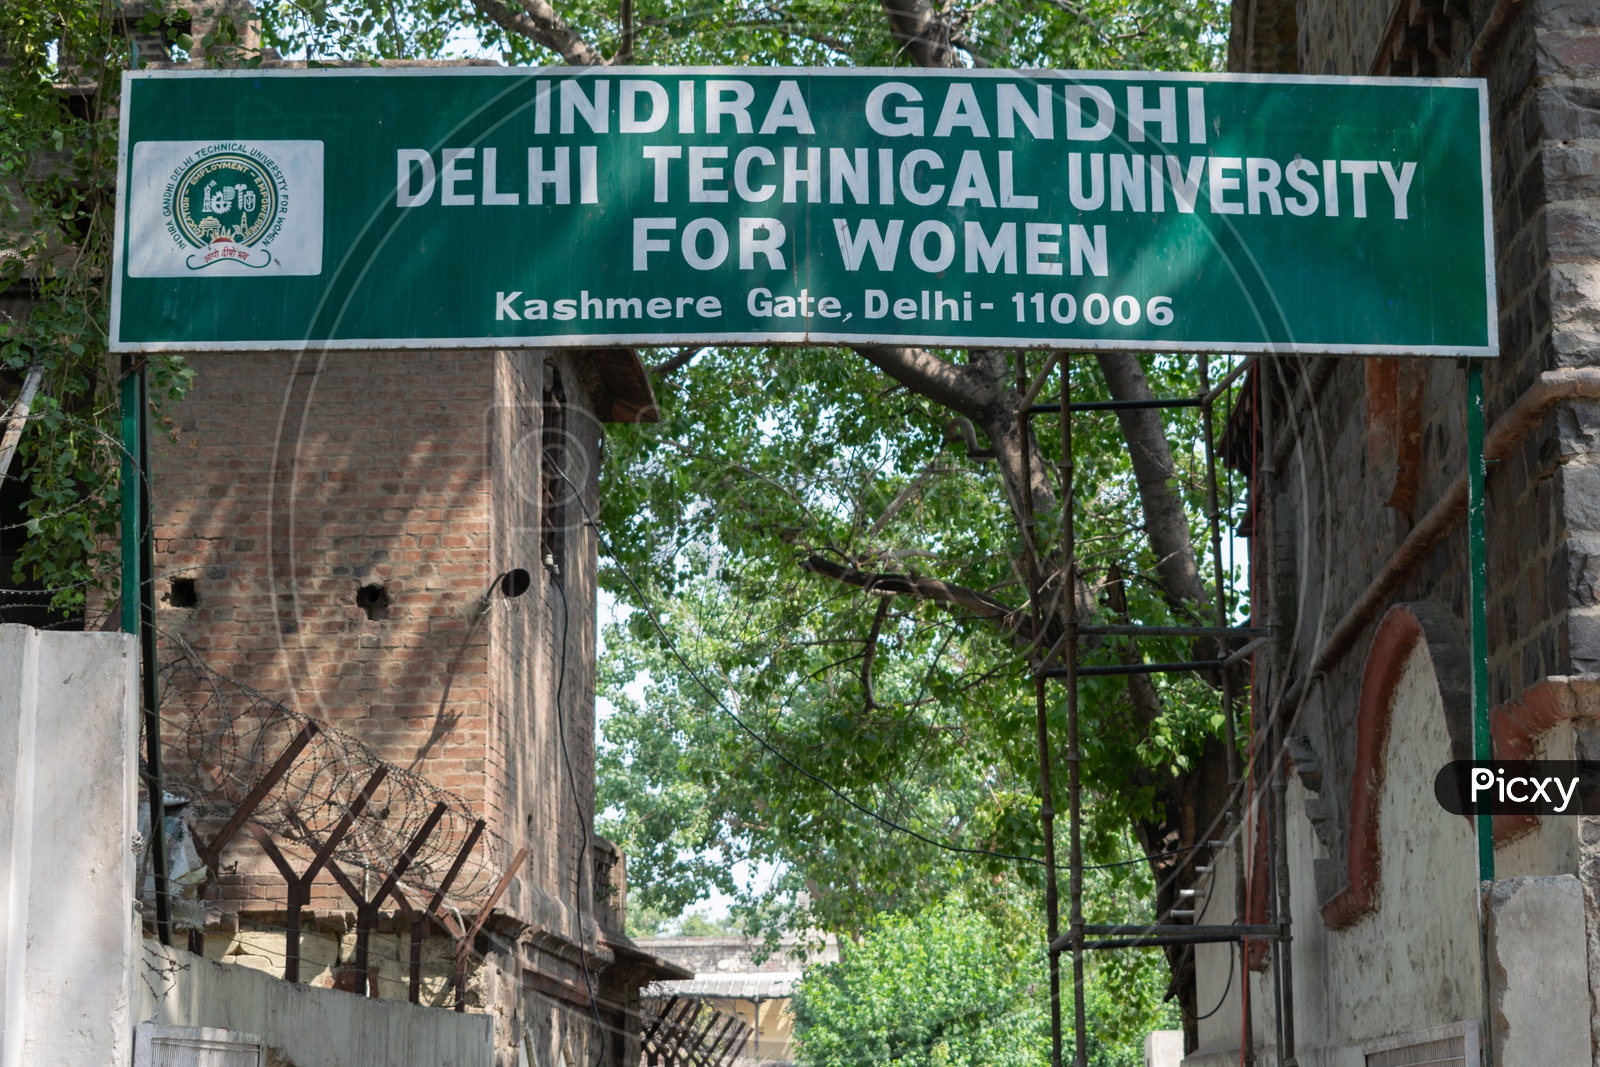 Indira Gandhi Delhi Technical University for Women, Delhi